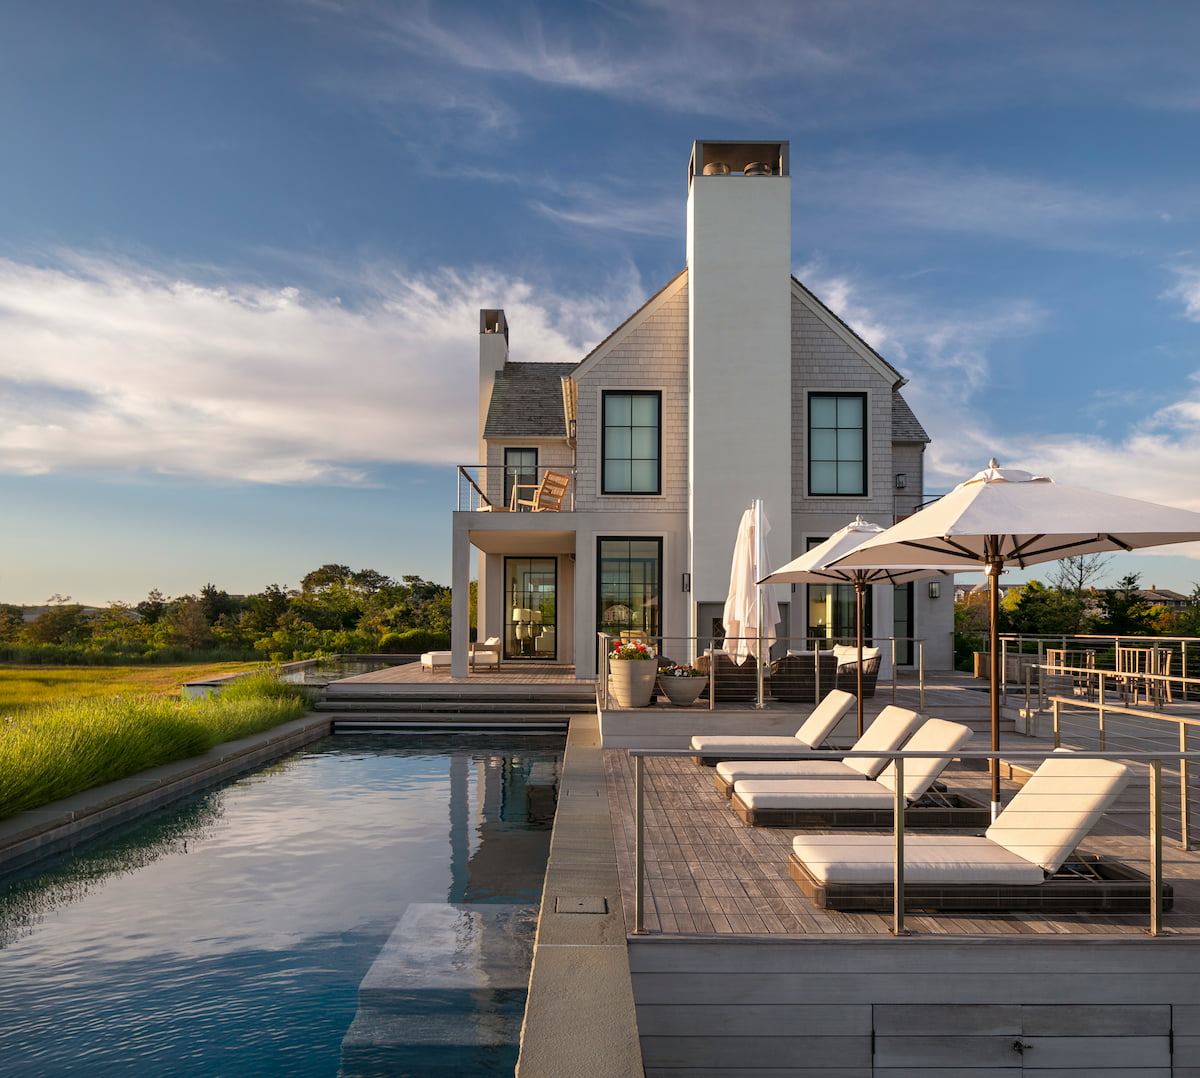 Custom built home and pool in the Hamptons